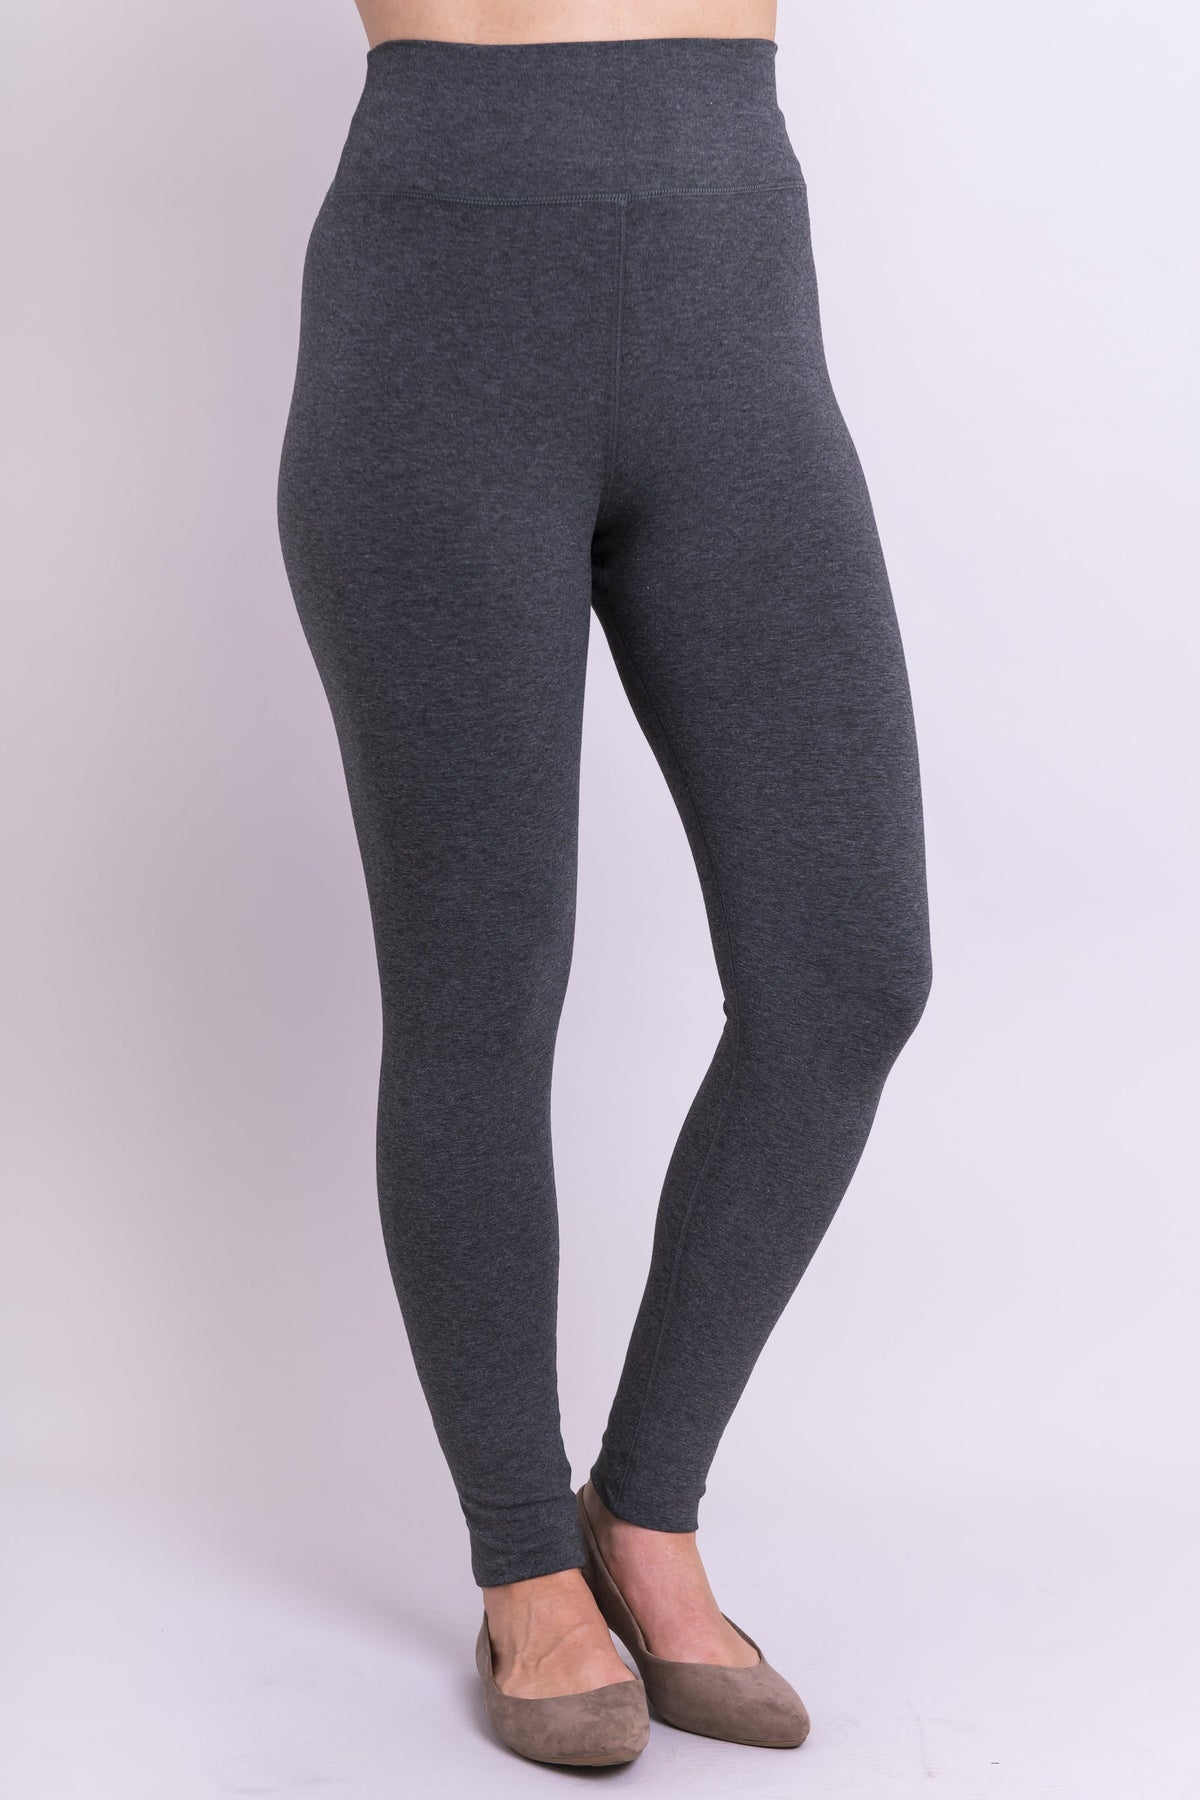 Grey Leggings - Buy Grey Leggings For Women Online